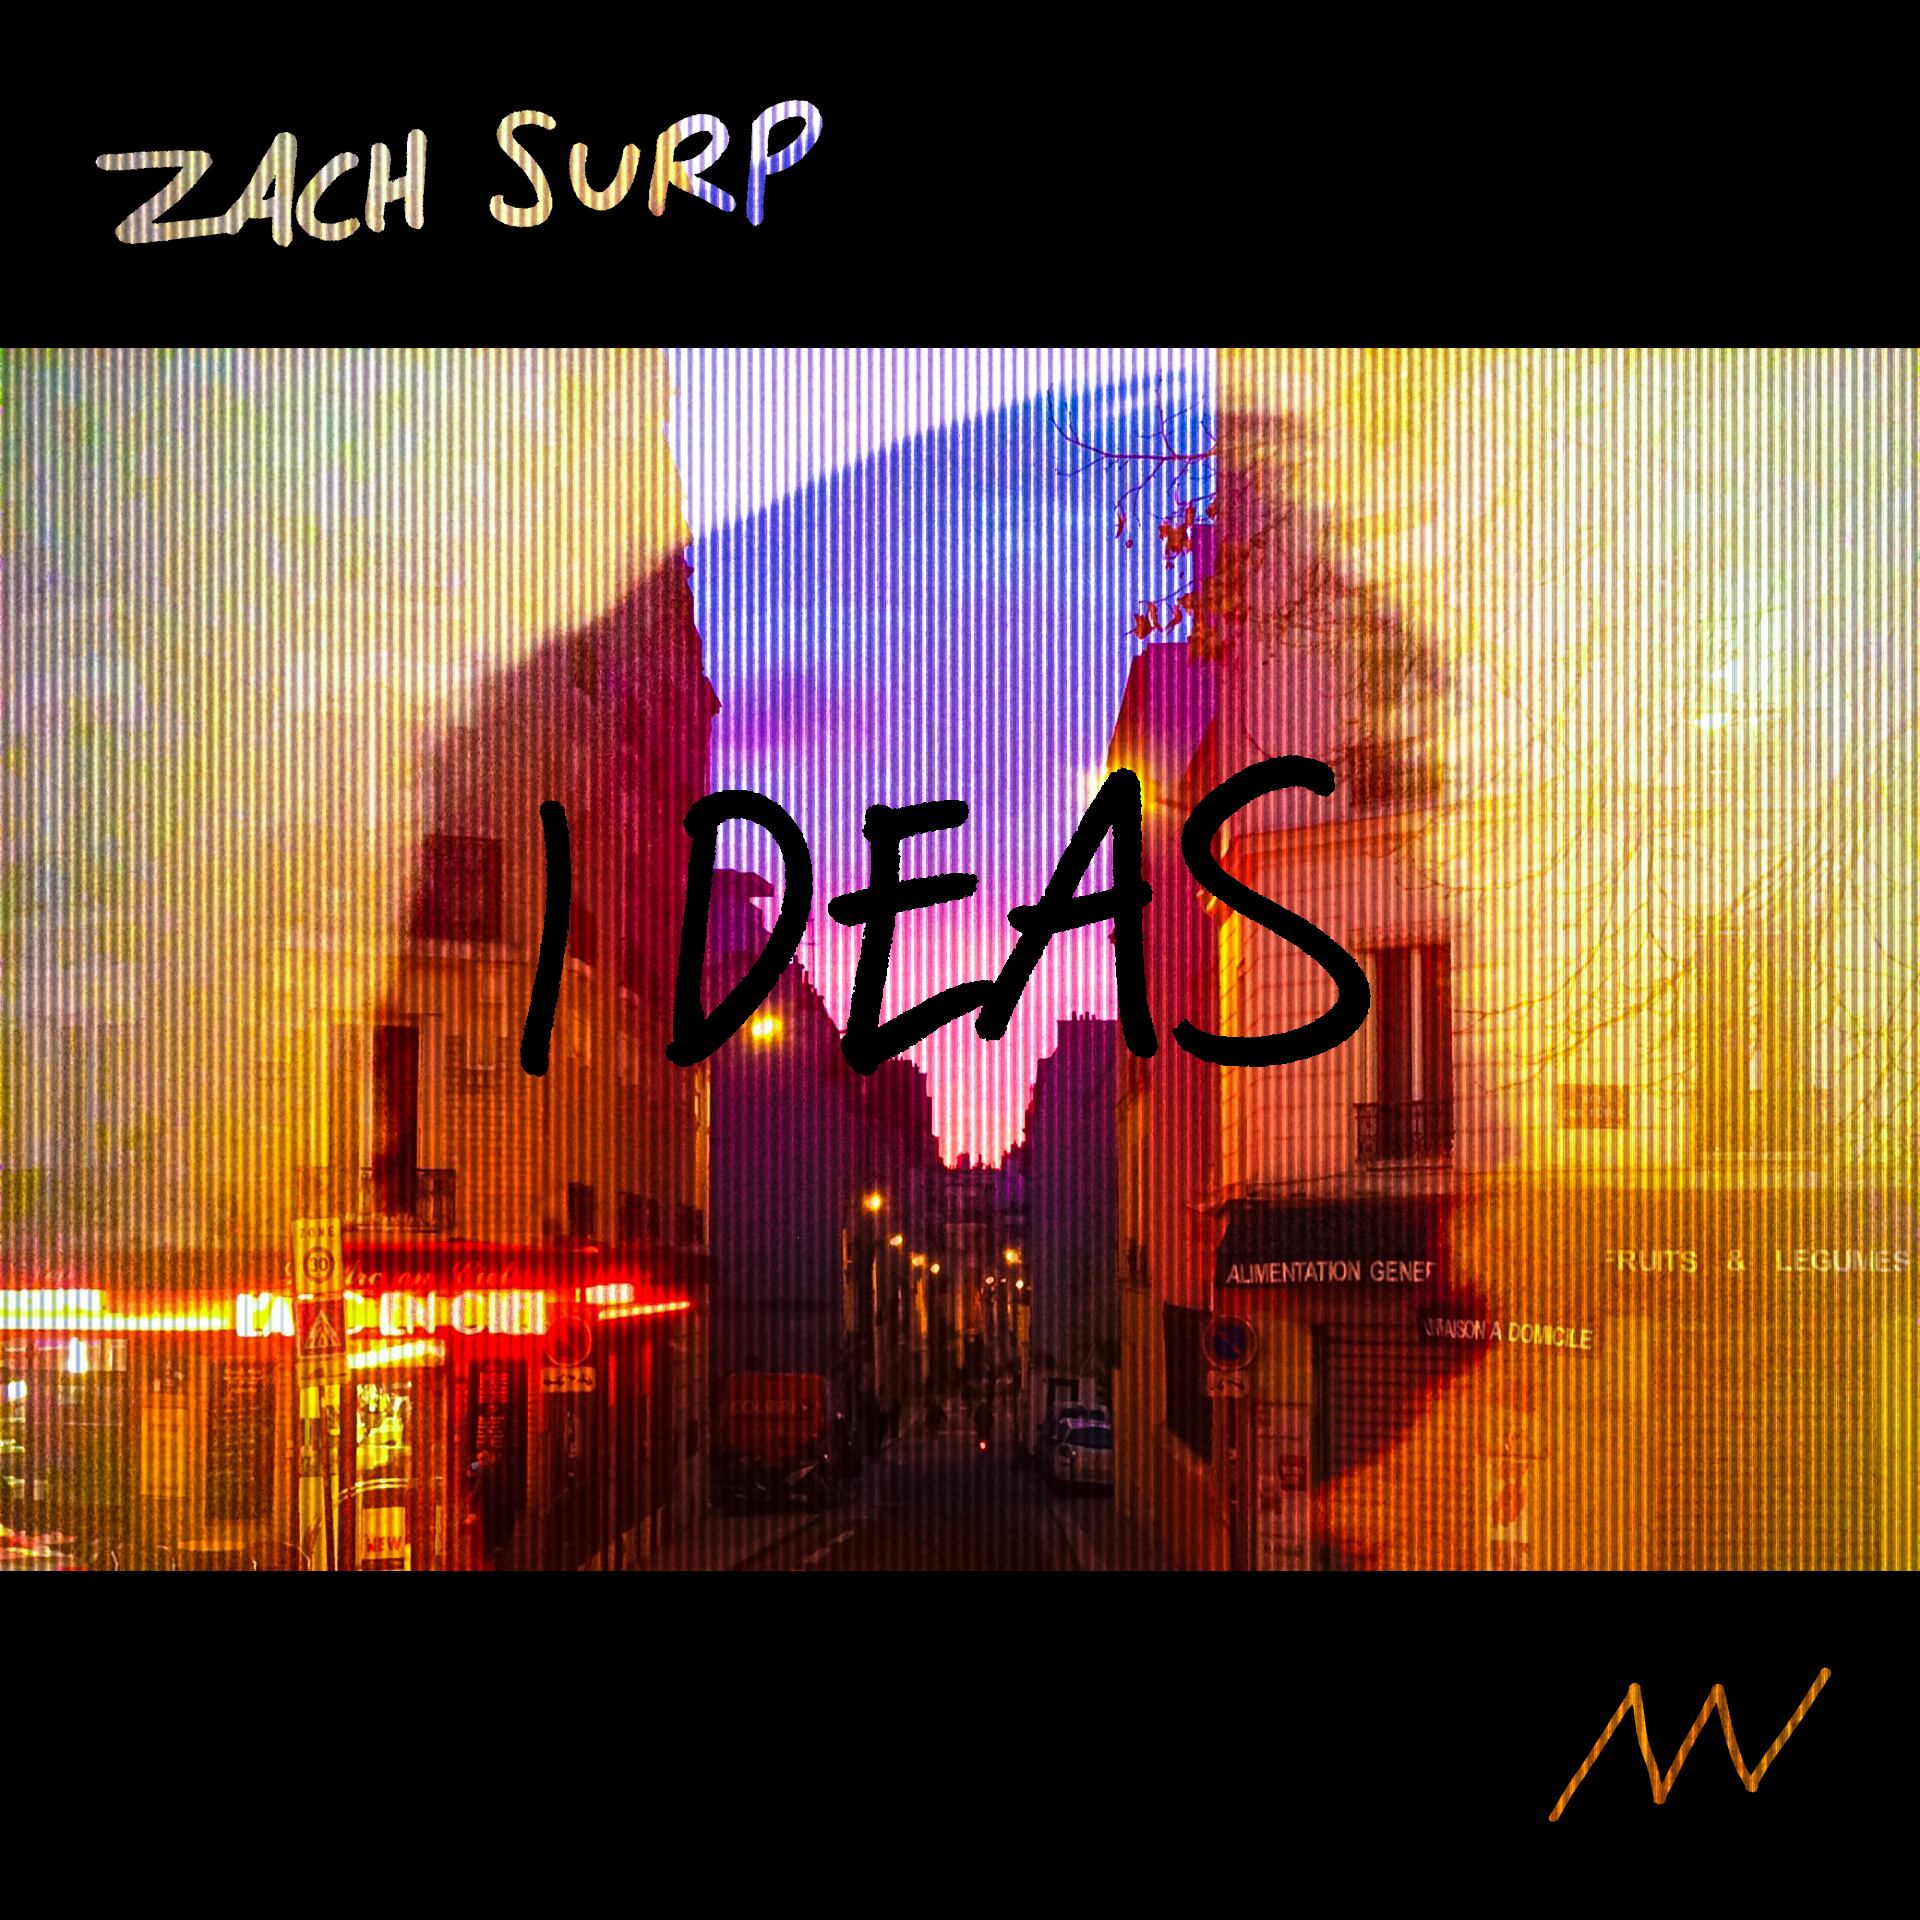 Ideas by Zach Surp